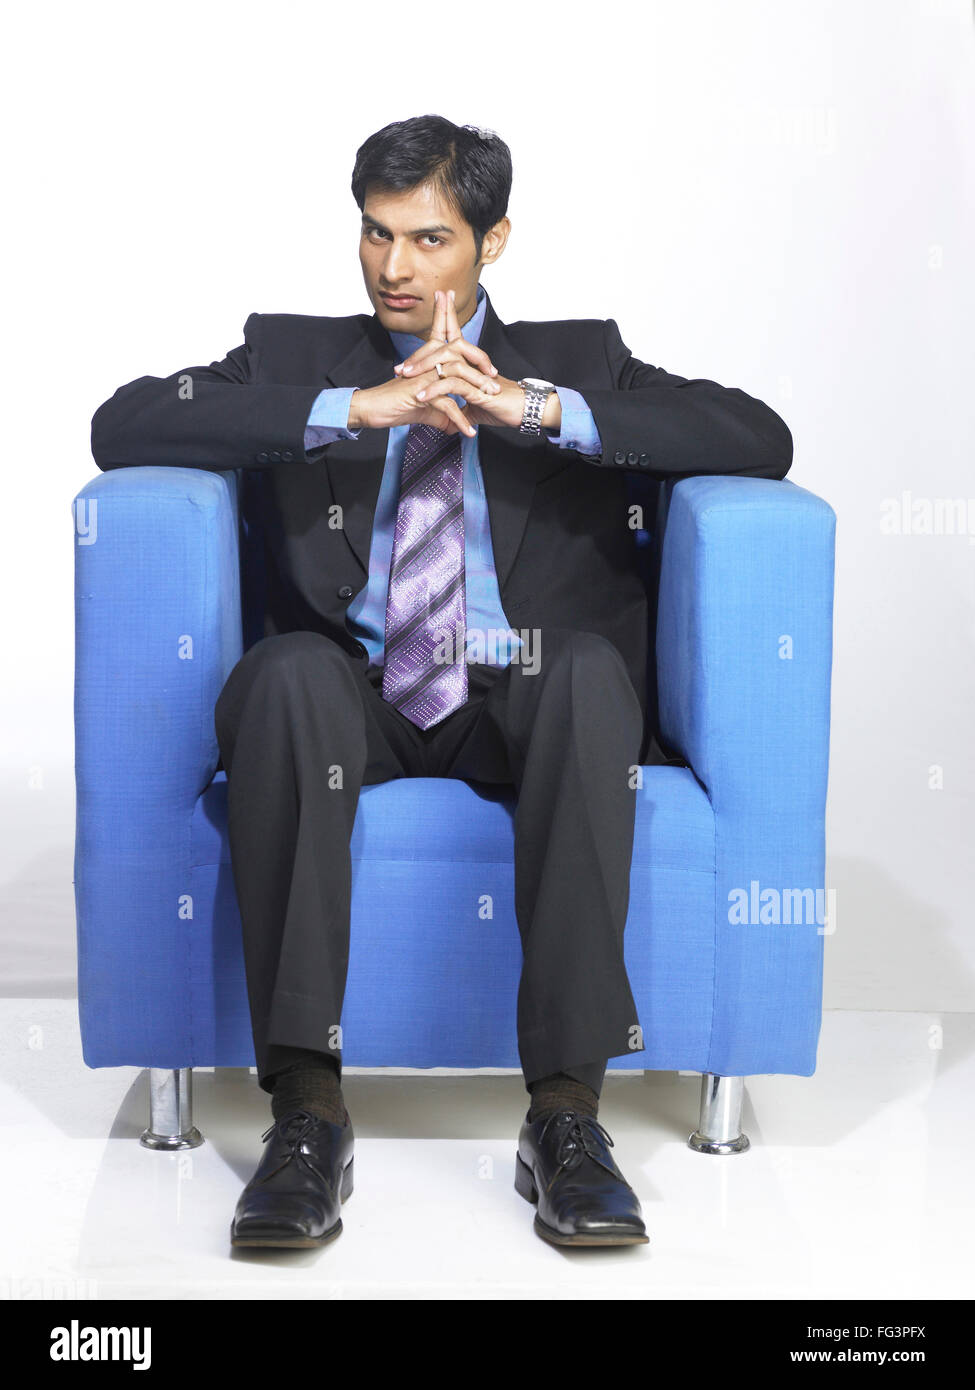 South Asian Indian executive man sitting on blue sofa MR Stock Photo